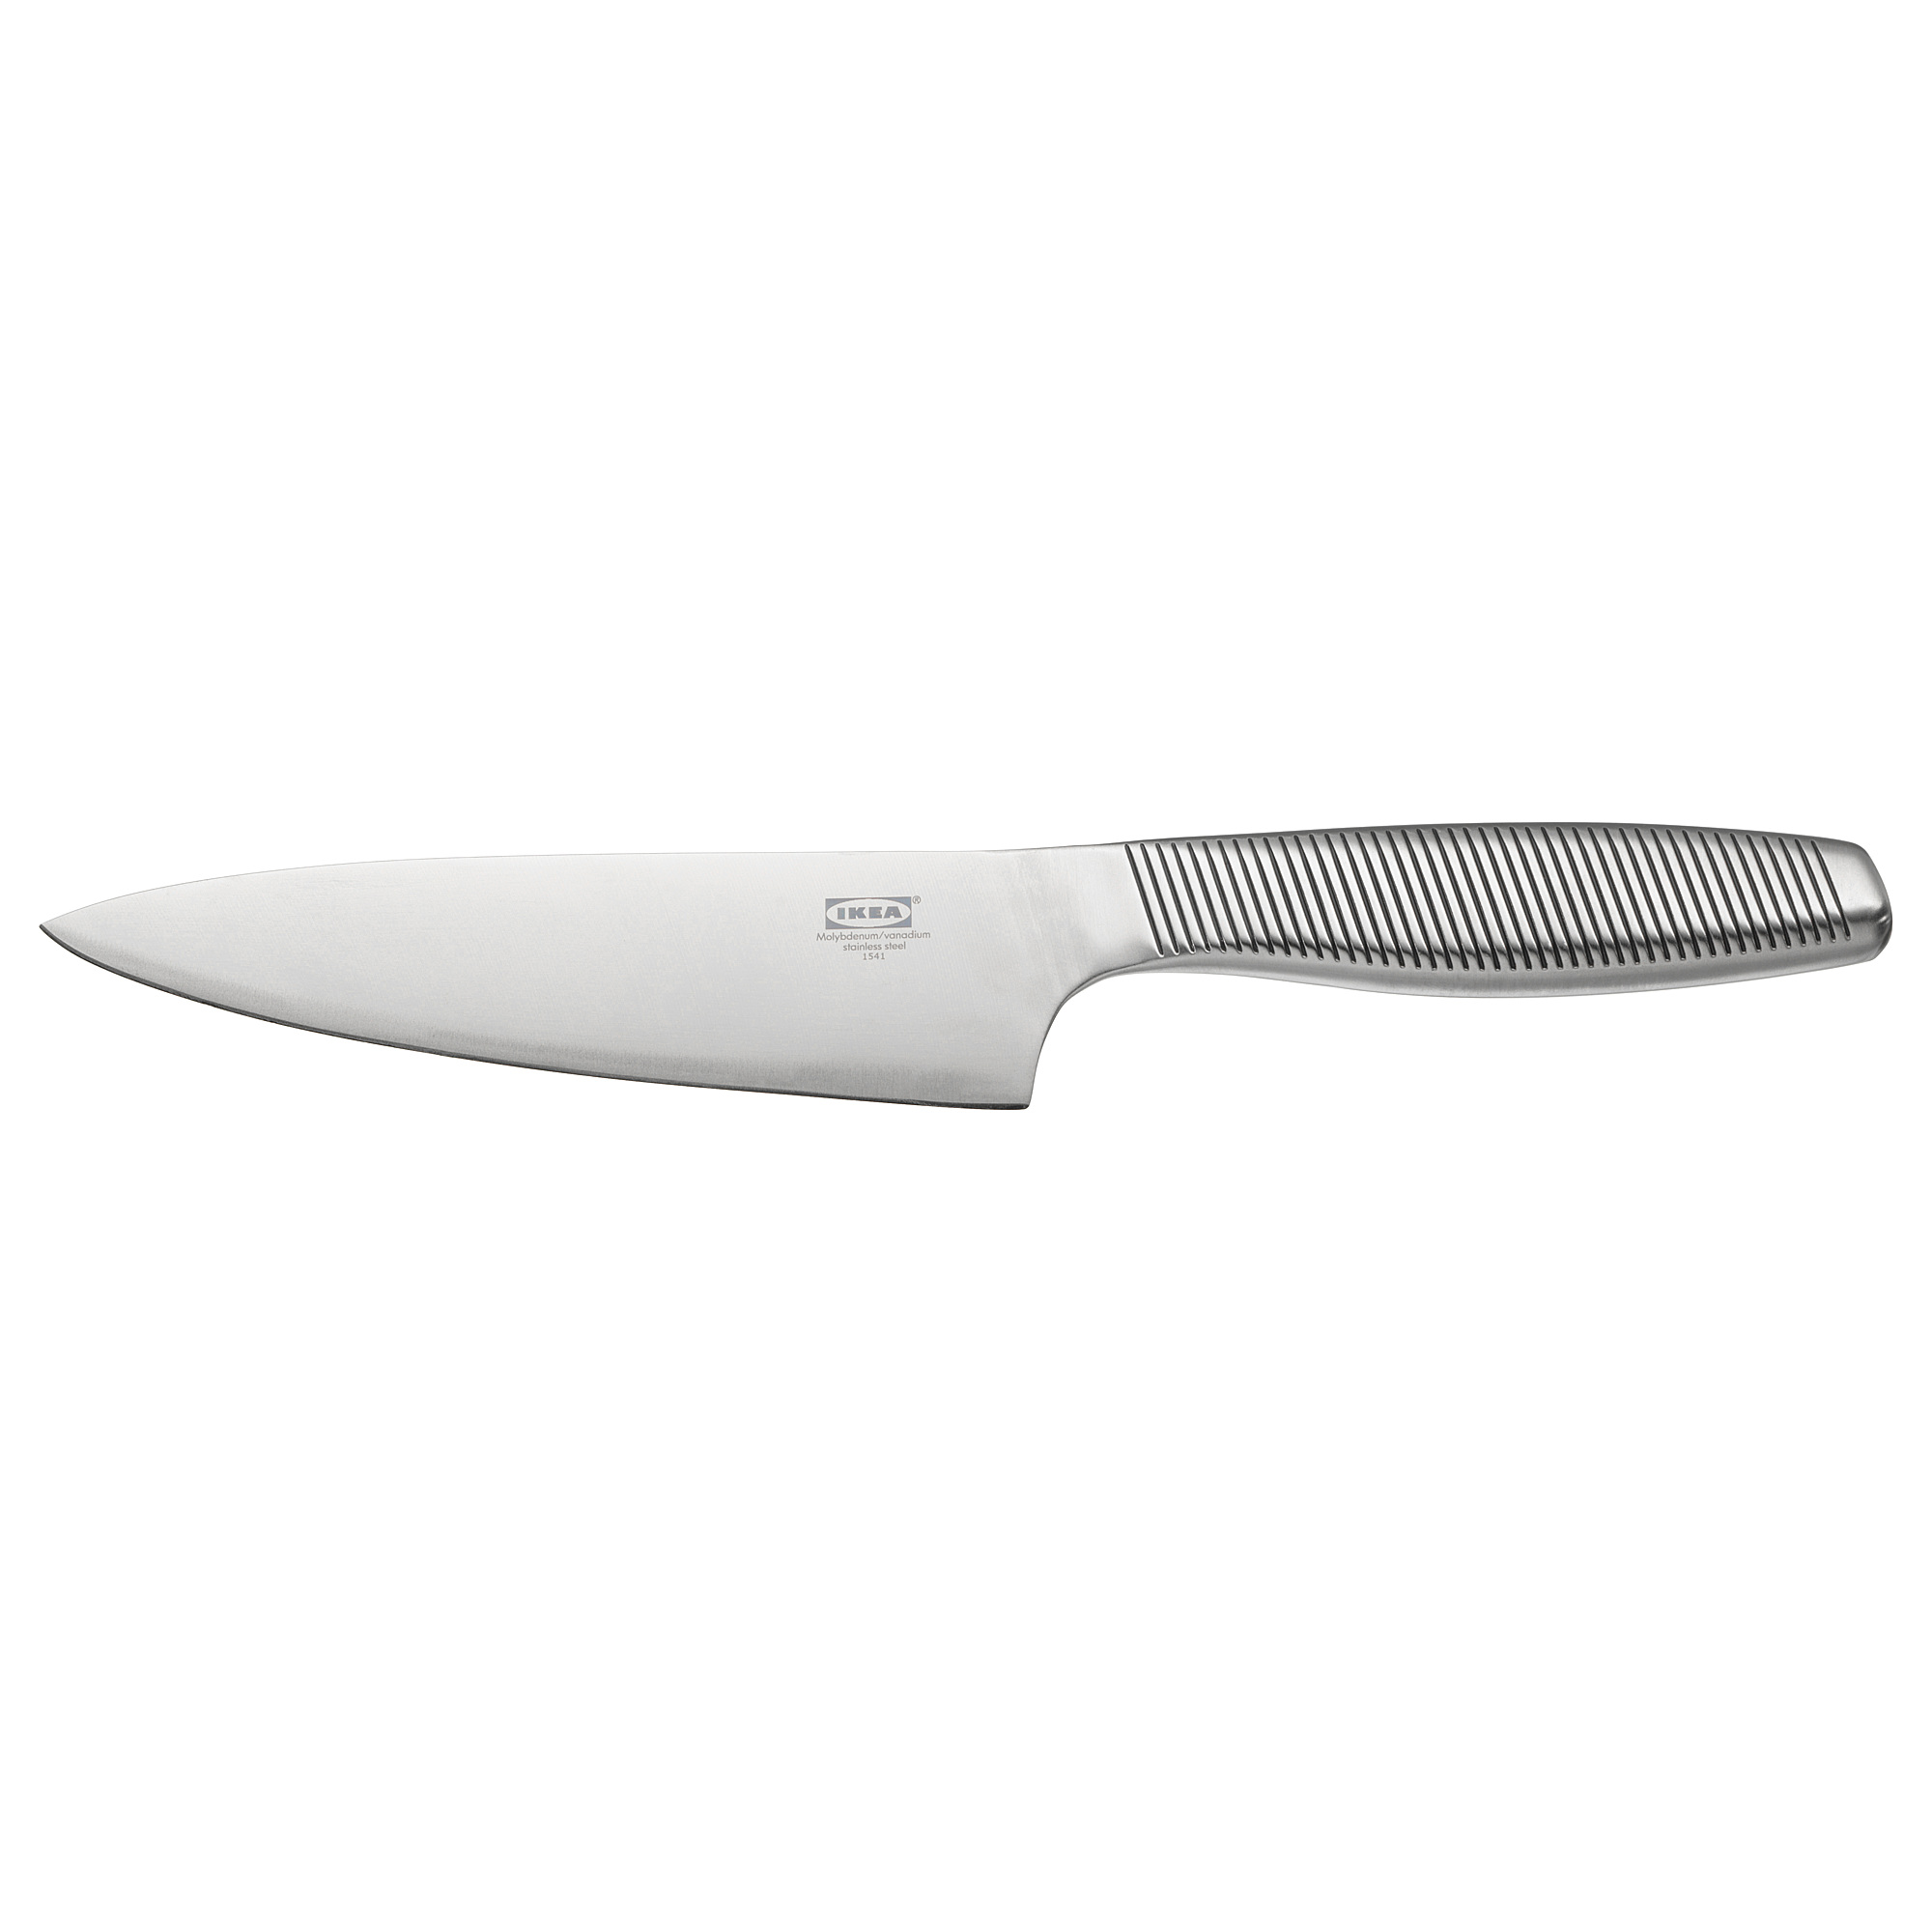 IKEA 365+ cook's knife